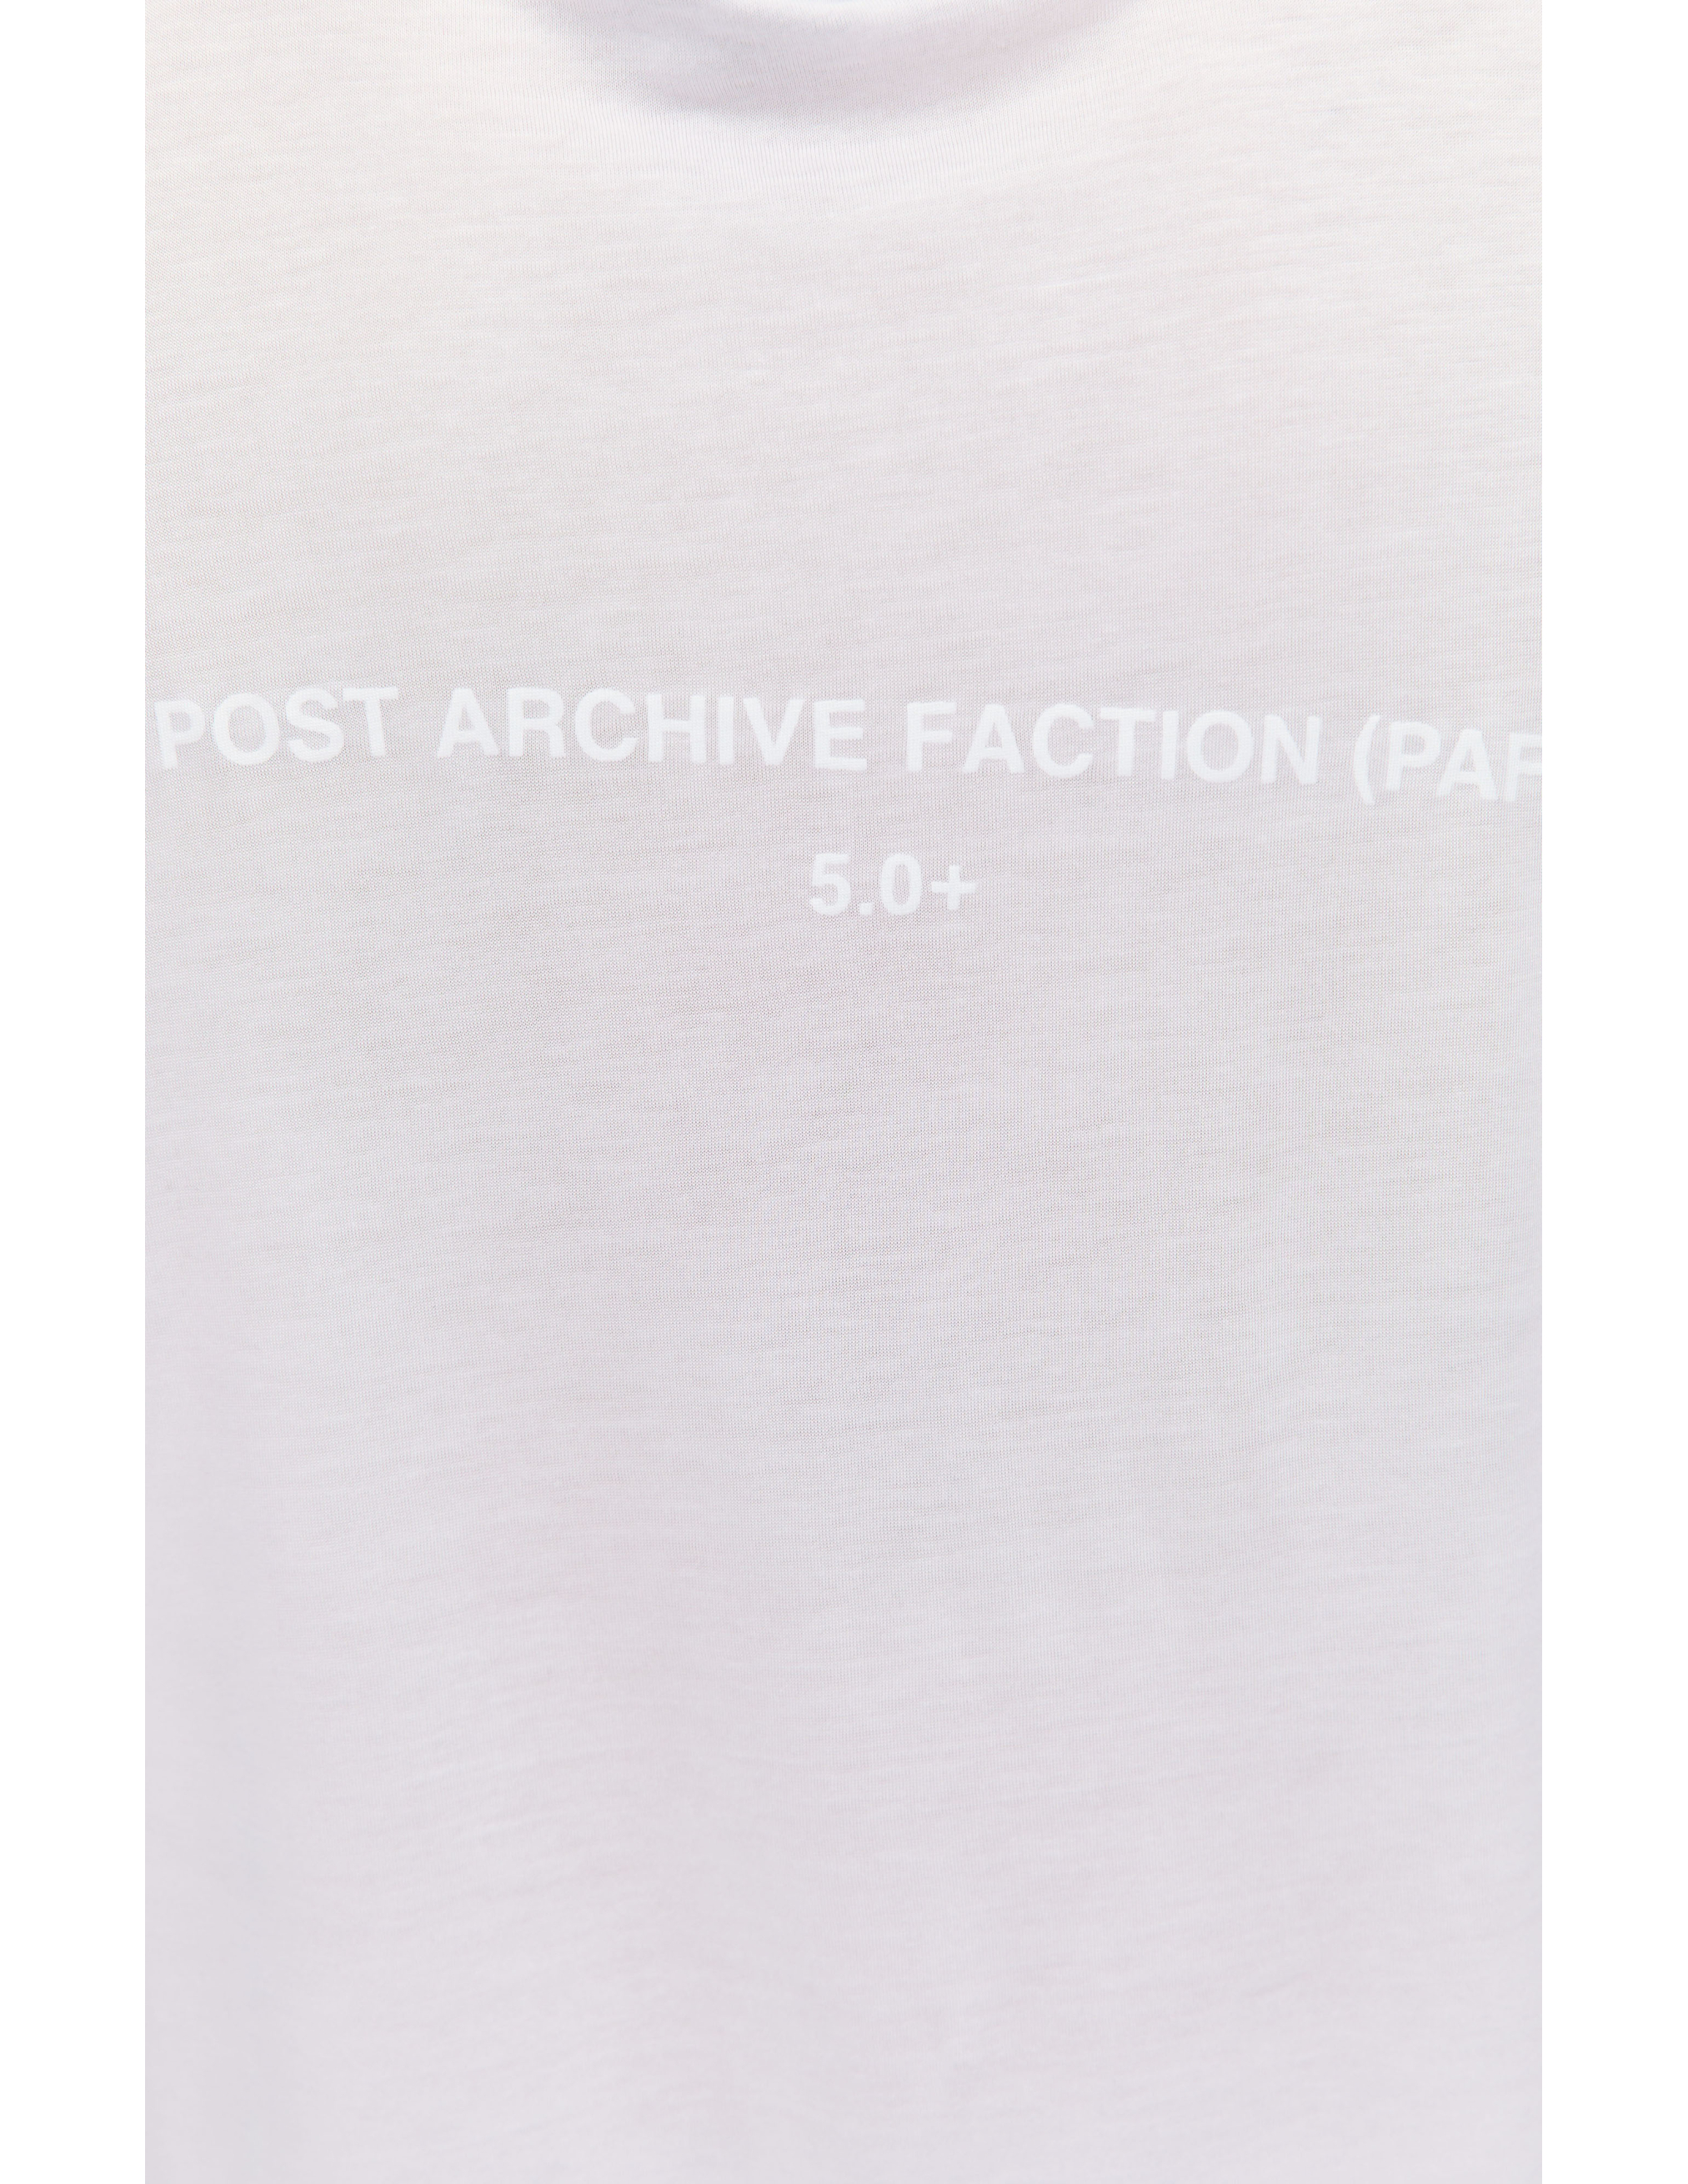 Белая футболка 5.0+ с логотипом Post Archive Faction 50TTRW, размер XL;L;M Белая футболка 5.0+ с логотипом - фото 4